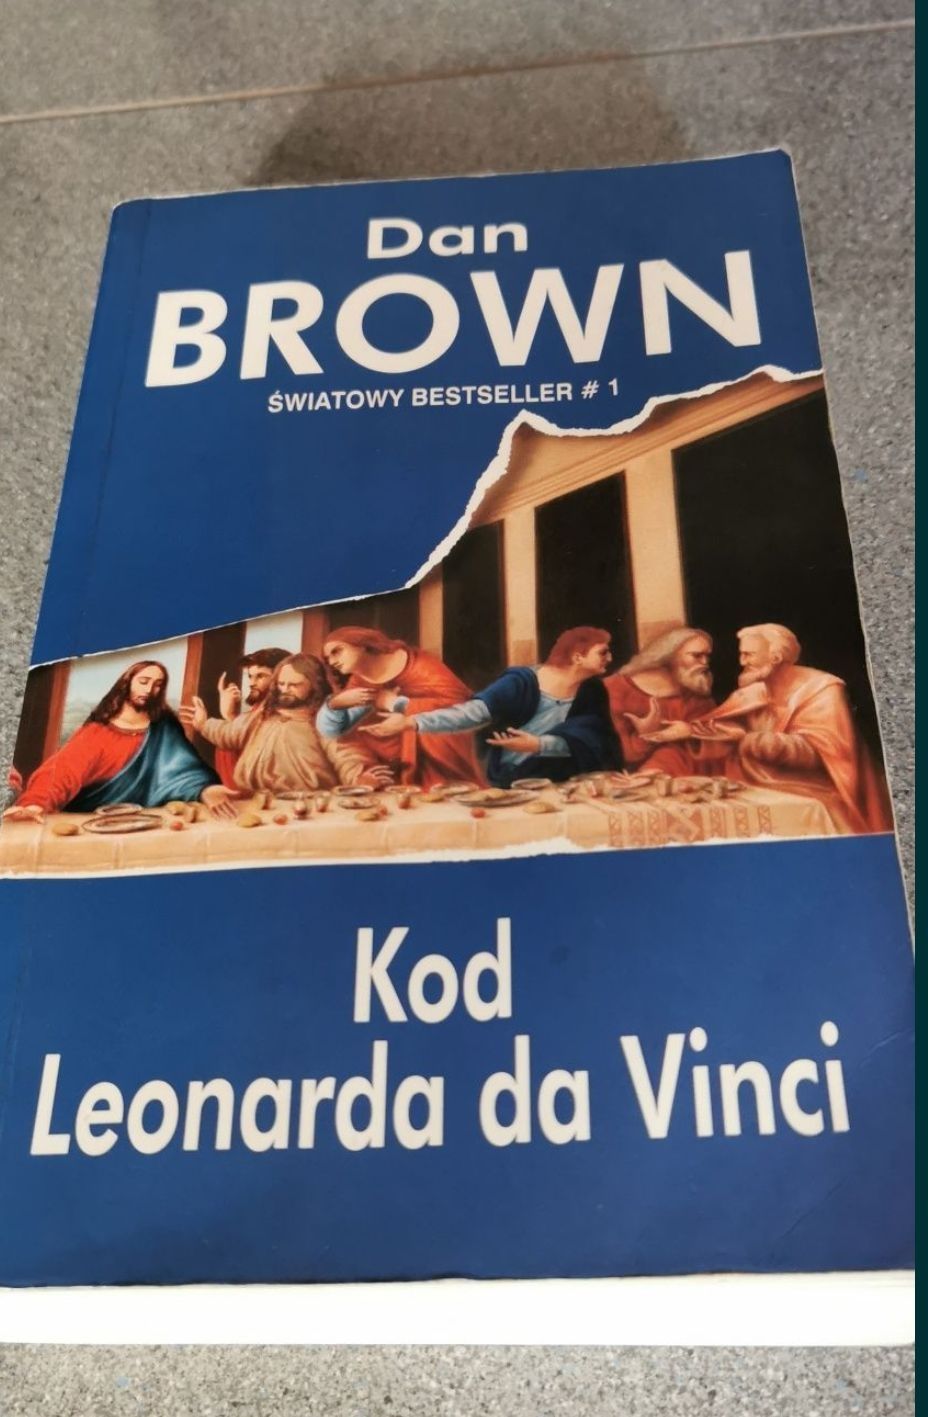 Kod Leonarda da Vinci
D. Brown